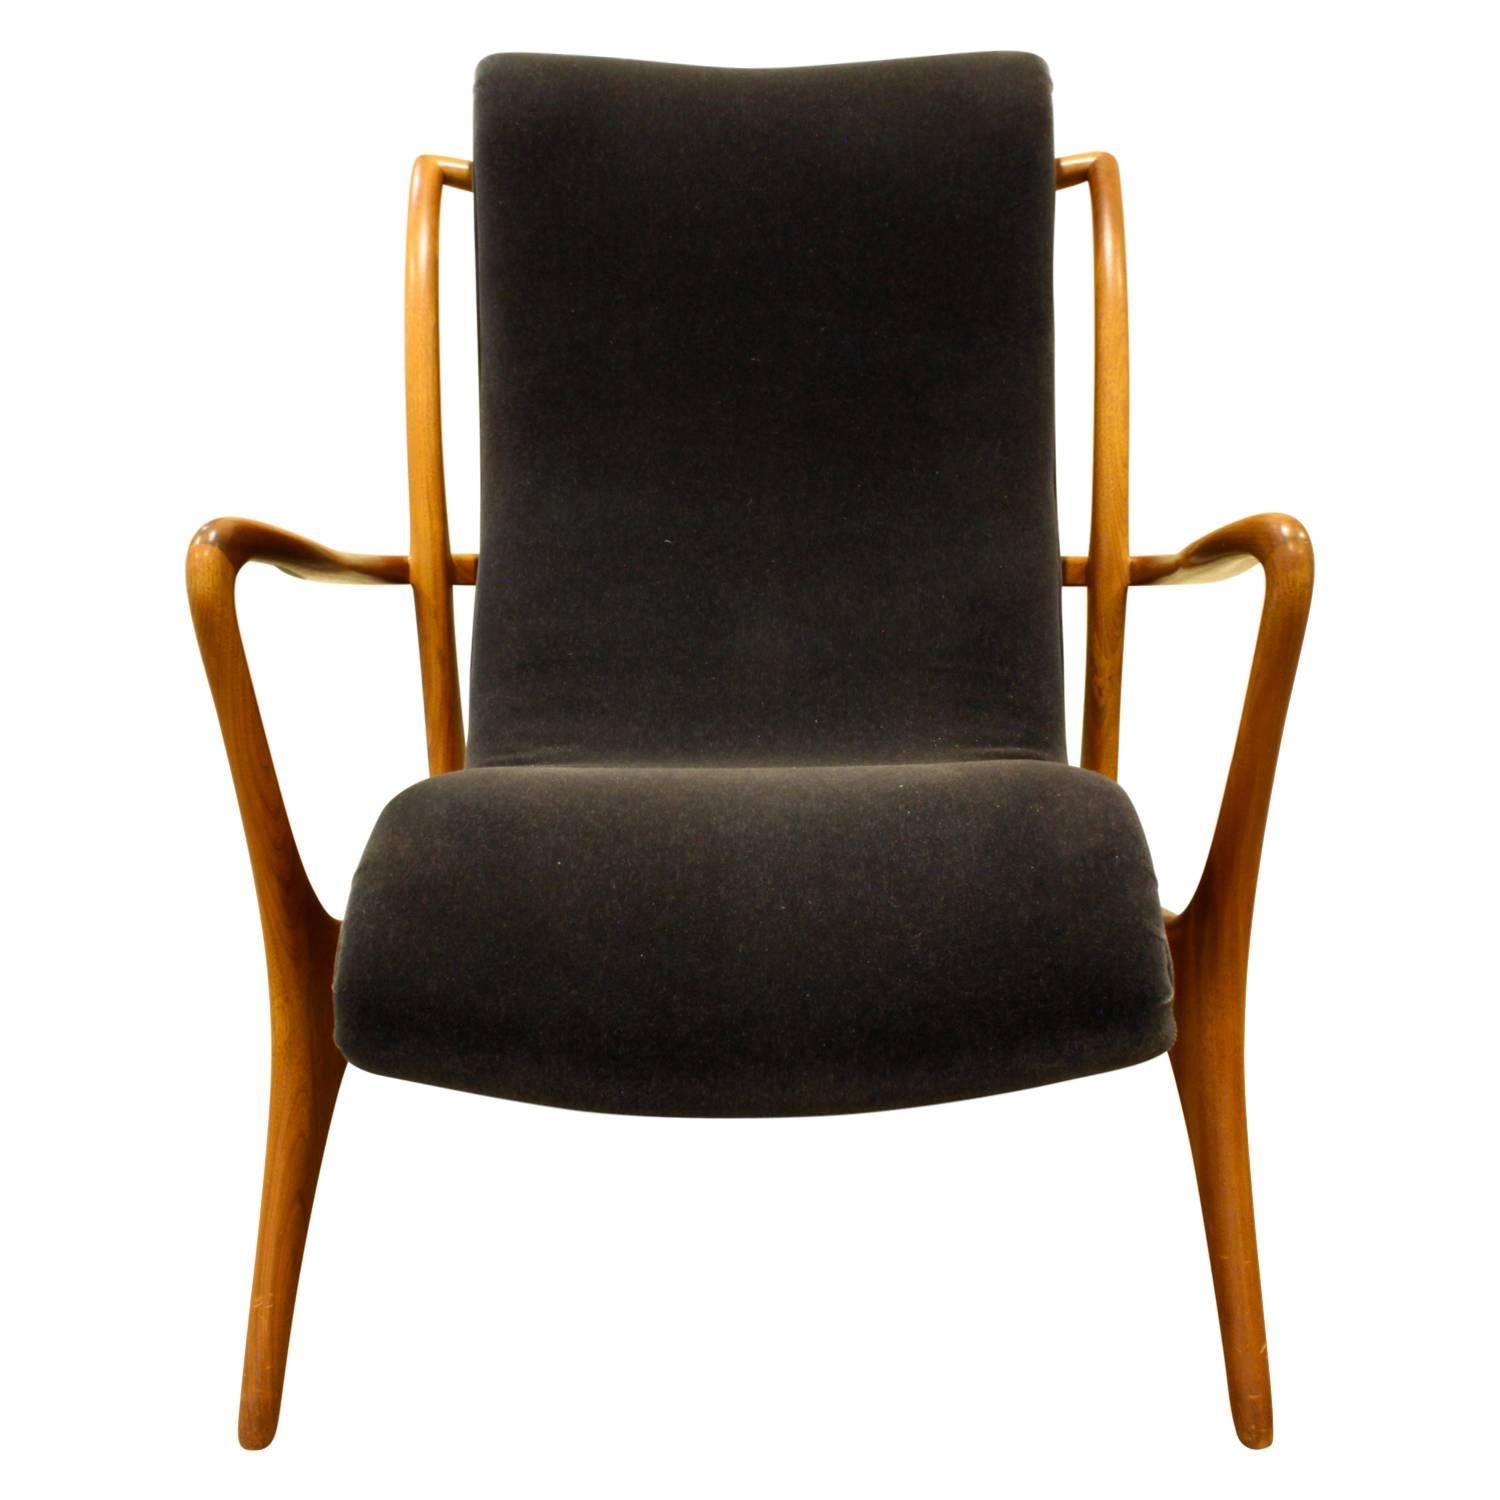 Mid-Century Modern Vladimir Kagan Sculpted Contour Chair, 1950s